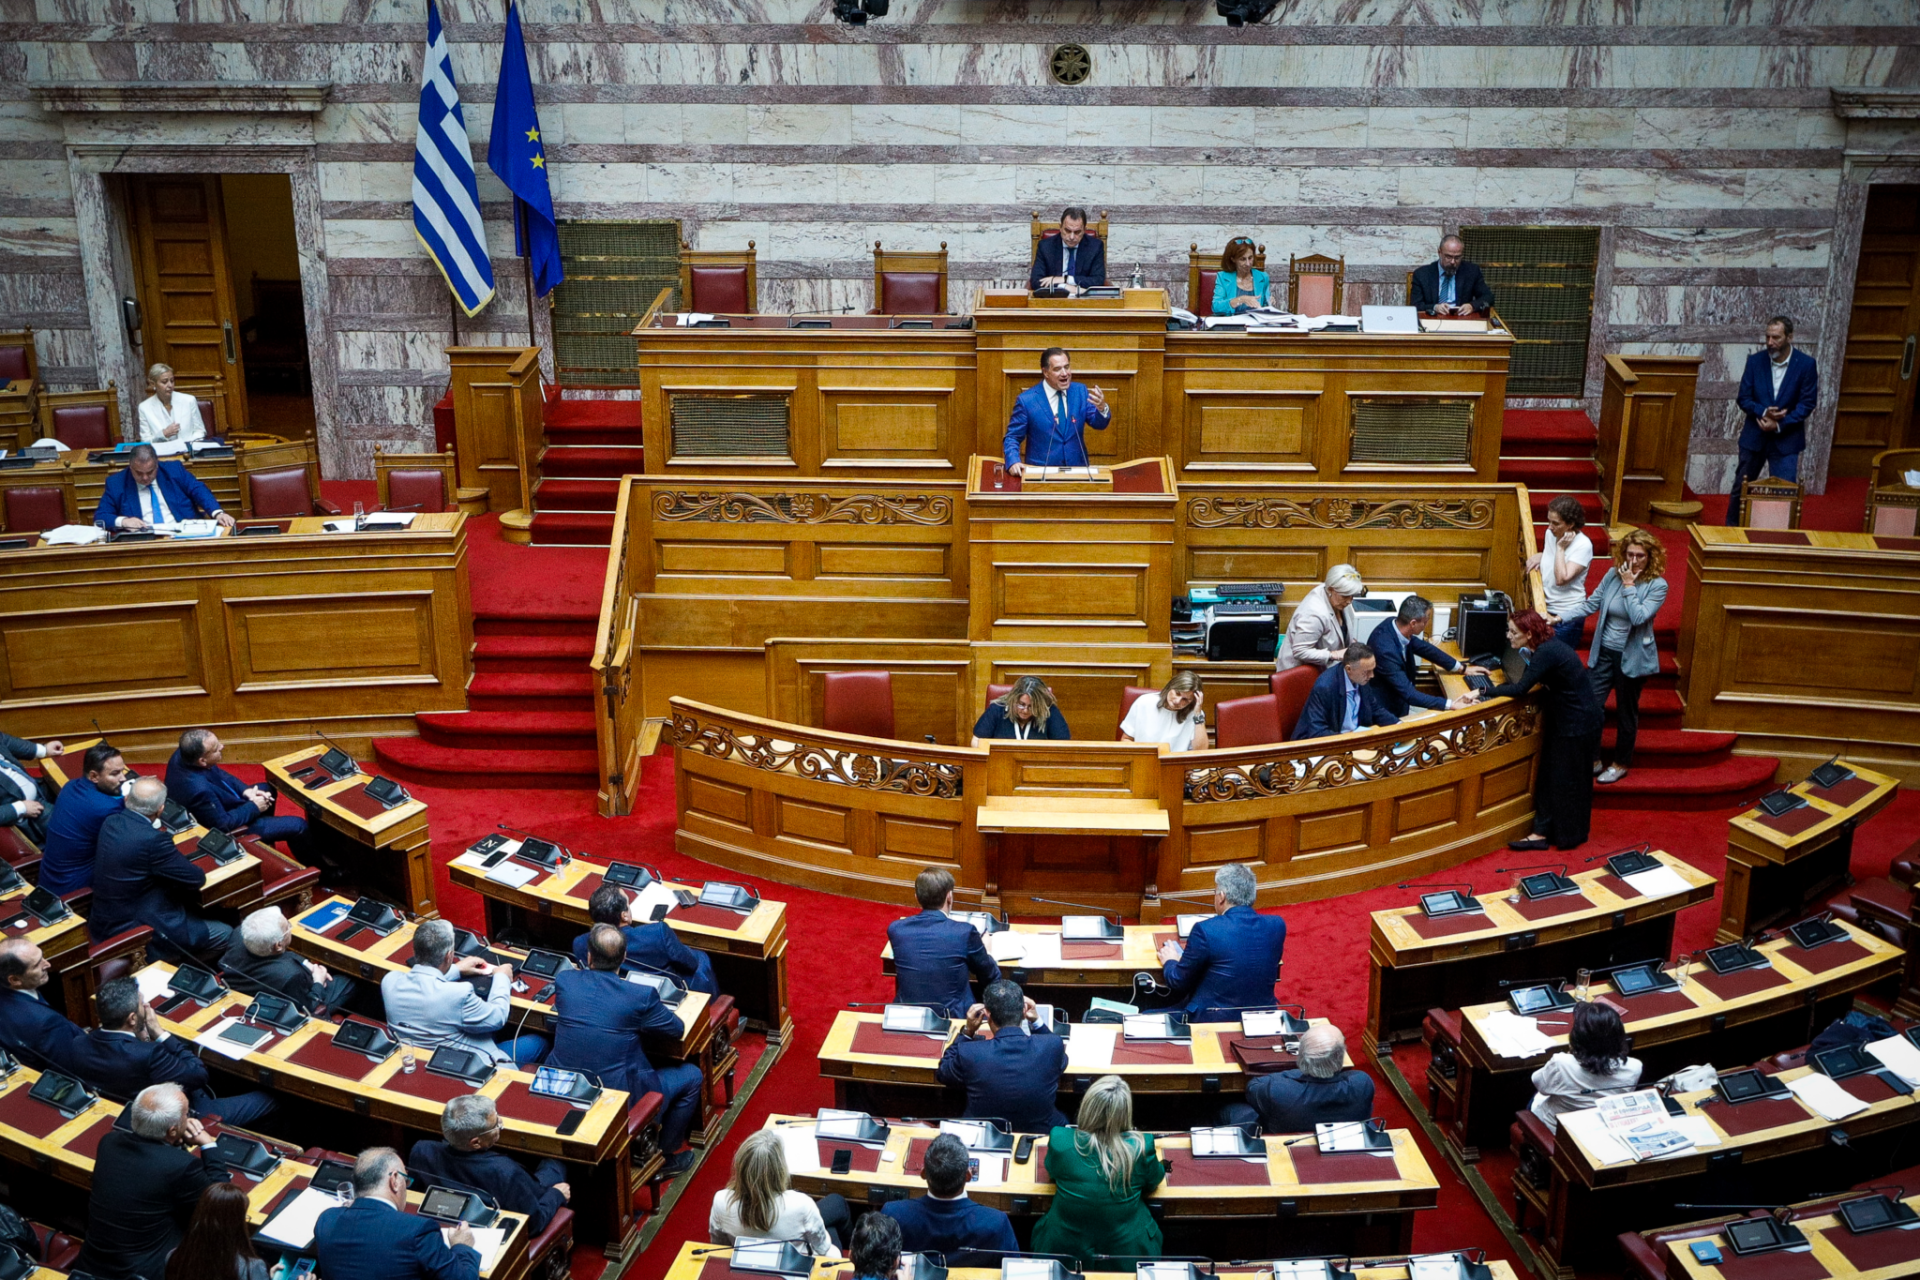 Eργασιακό νομοσχέδιο: Σε υψηλούς τόνους η αντιπαράθεση κυβέρνησης και αντιπολίτευσης στη Βουλή